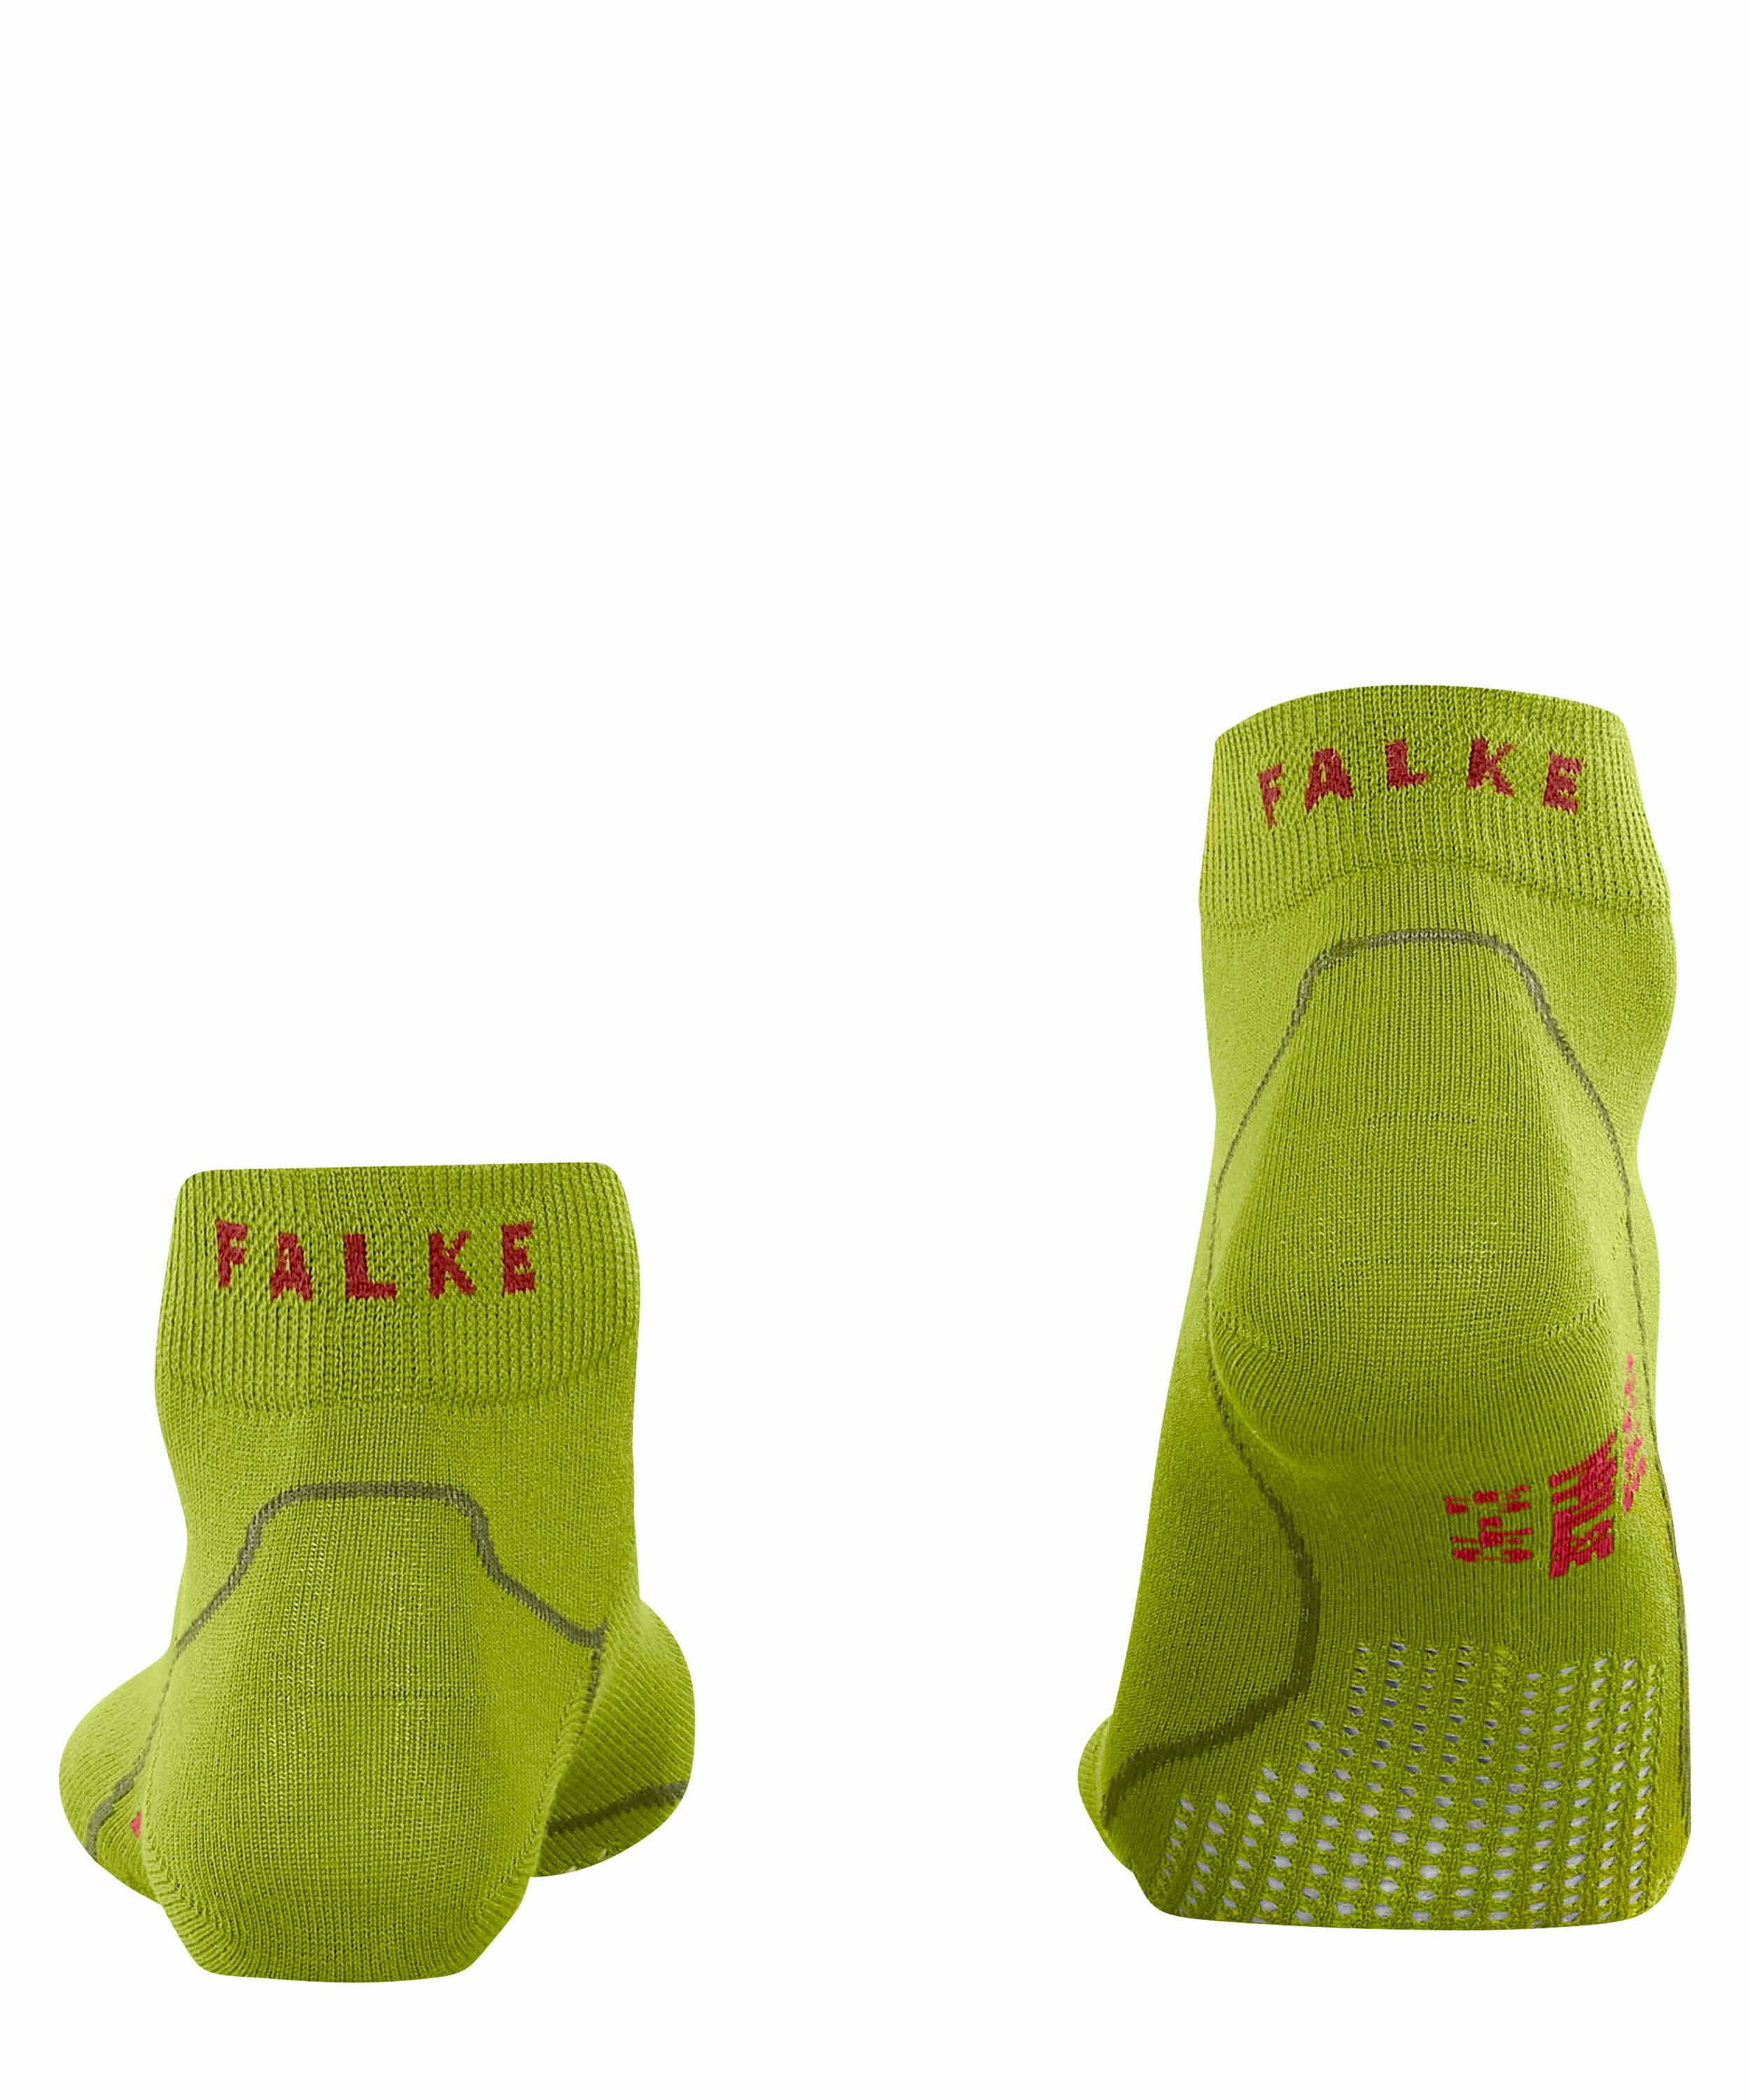 FALKE Impulse Air Herren Socken, 39-41, Gelb, 16068-760102 günstig online kaufen